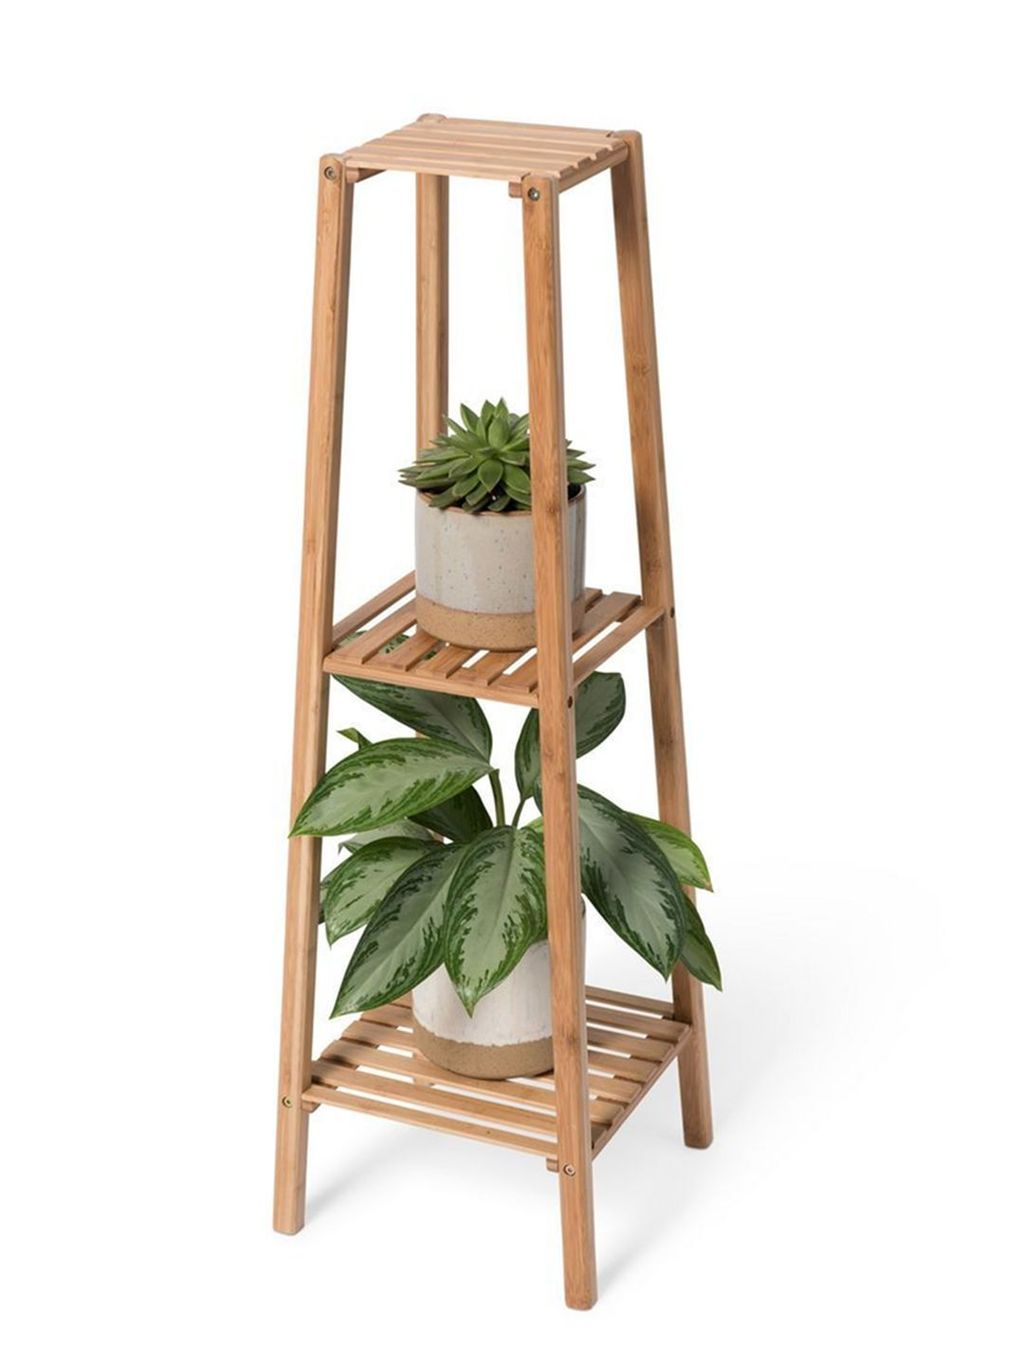 Awesome Diy Plant Shelf Design Ideas To Organize Your Garden33